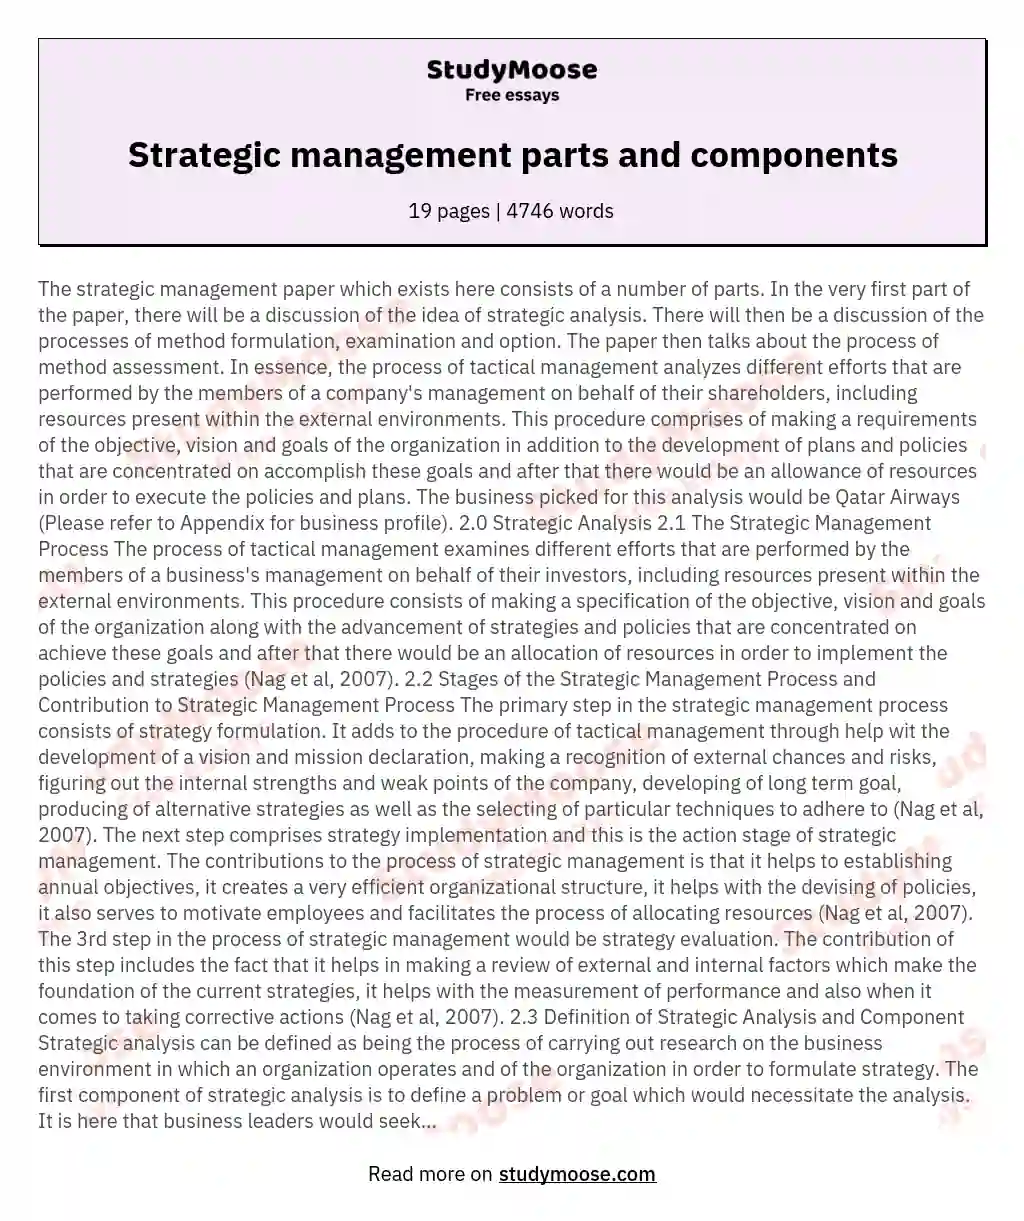 Strategic management parts and components essay